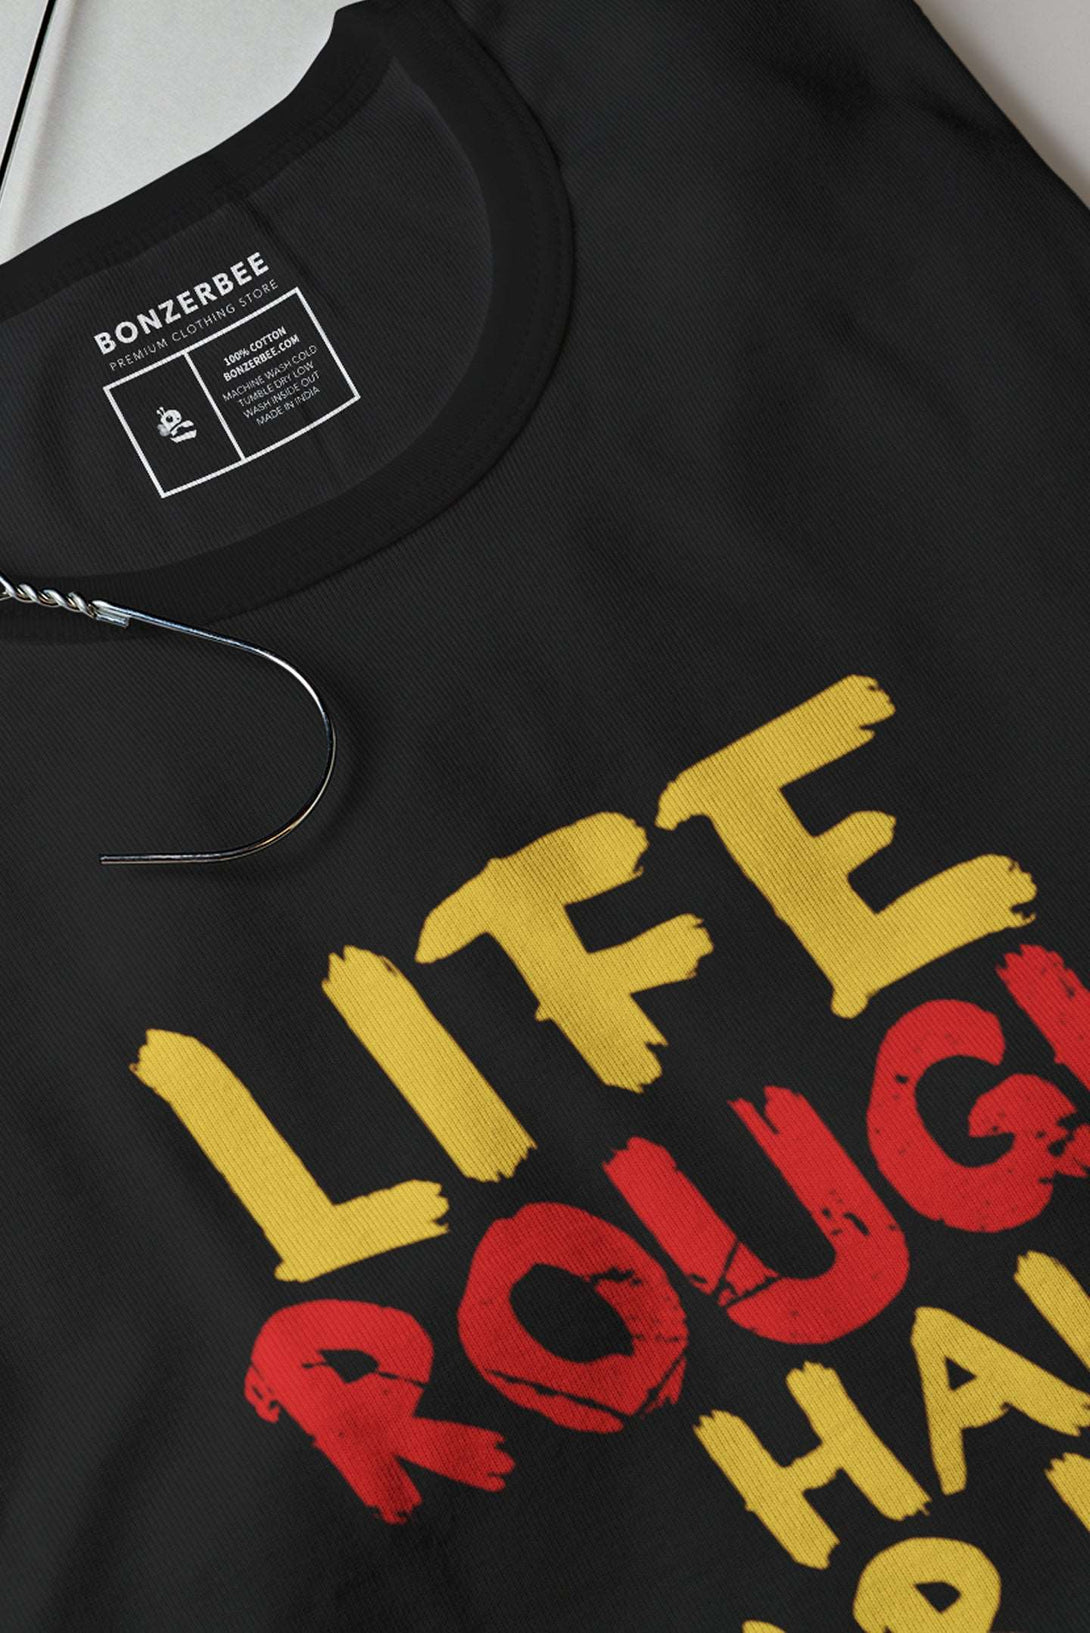 Life Rough Hai Black Unisex Fit T-shirt